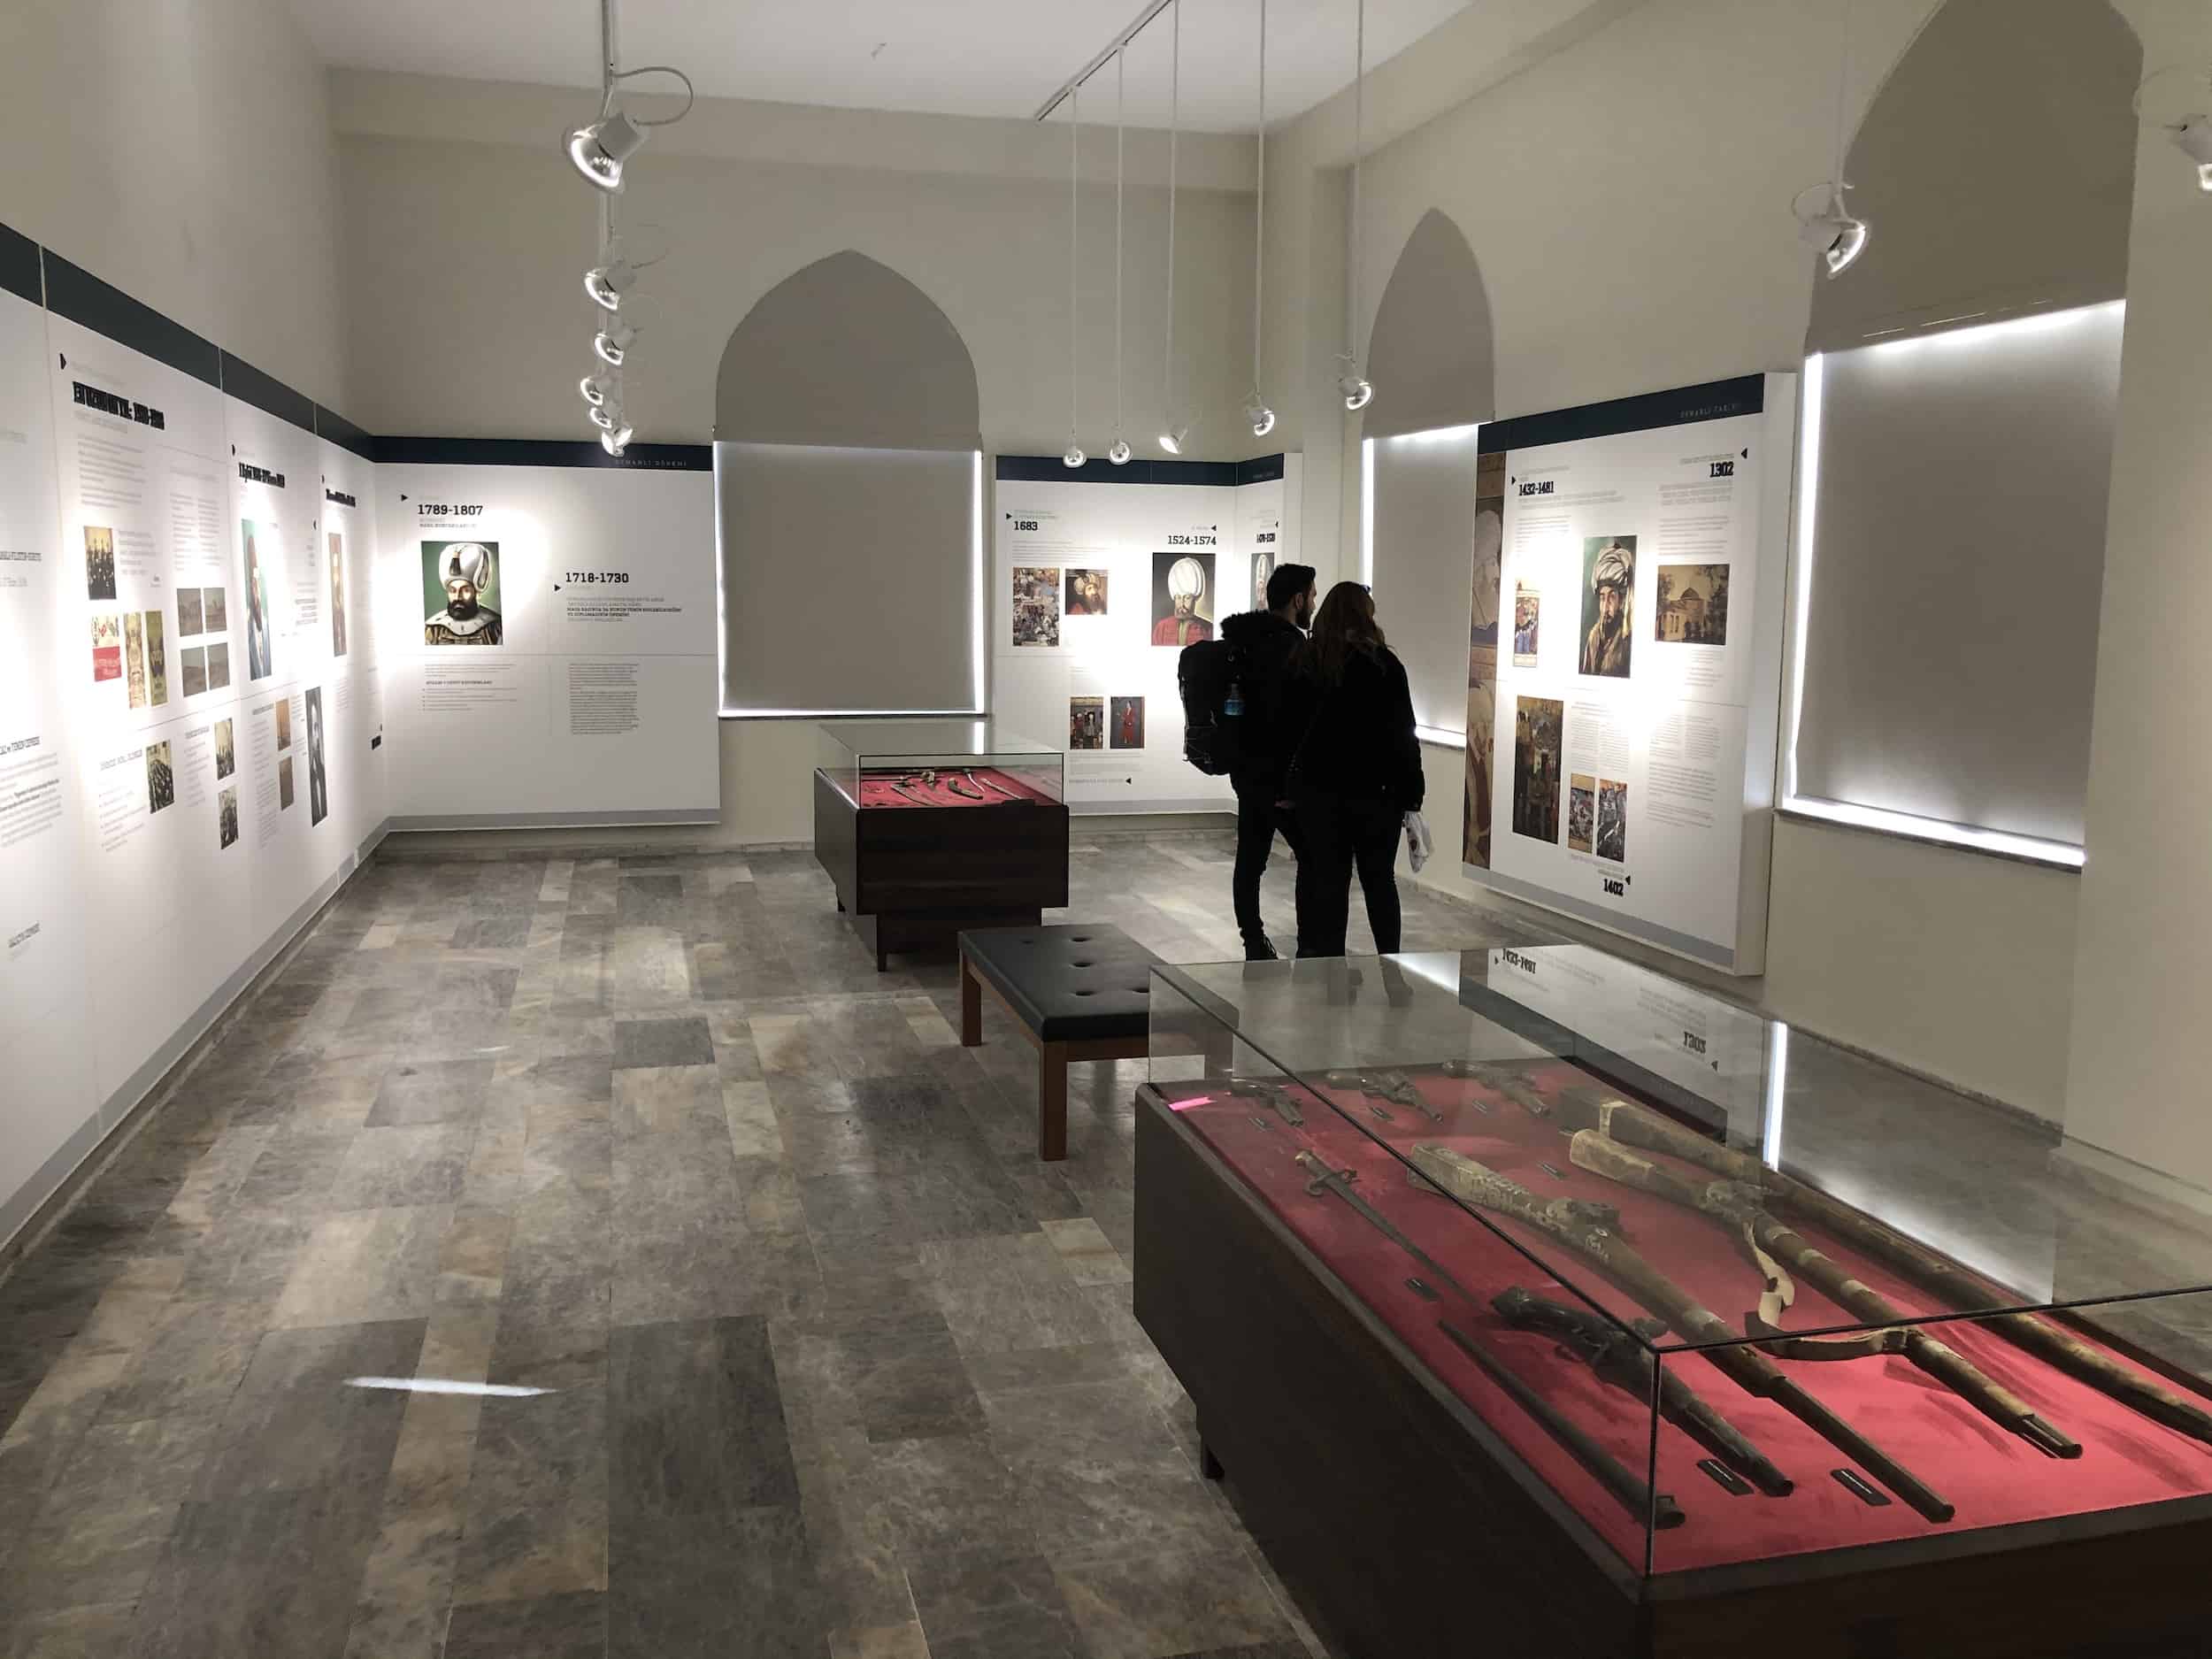 Turkish history exhibit at the Anadolu University Republic History Museum in Eskişehir, Turkey